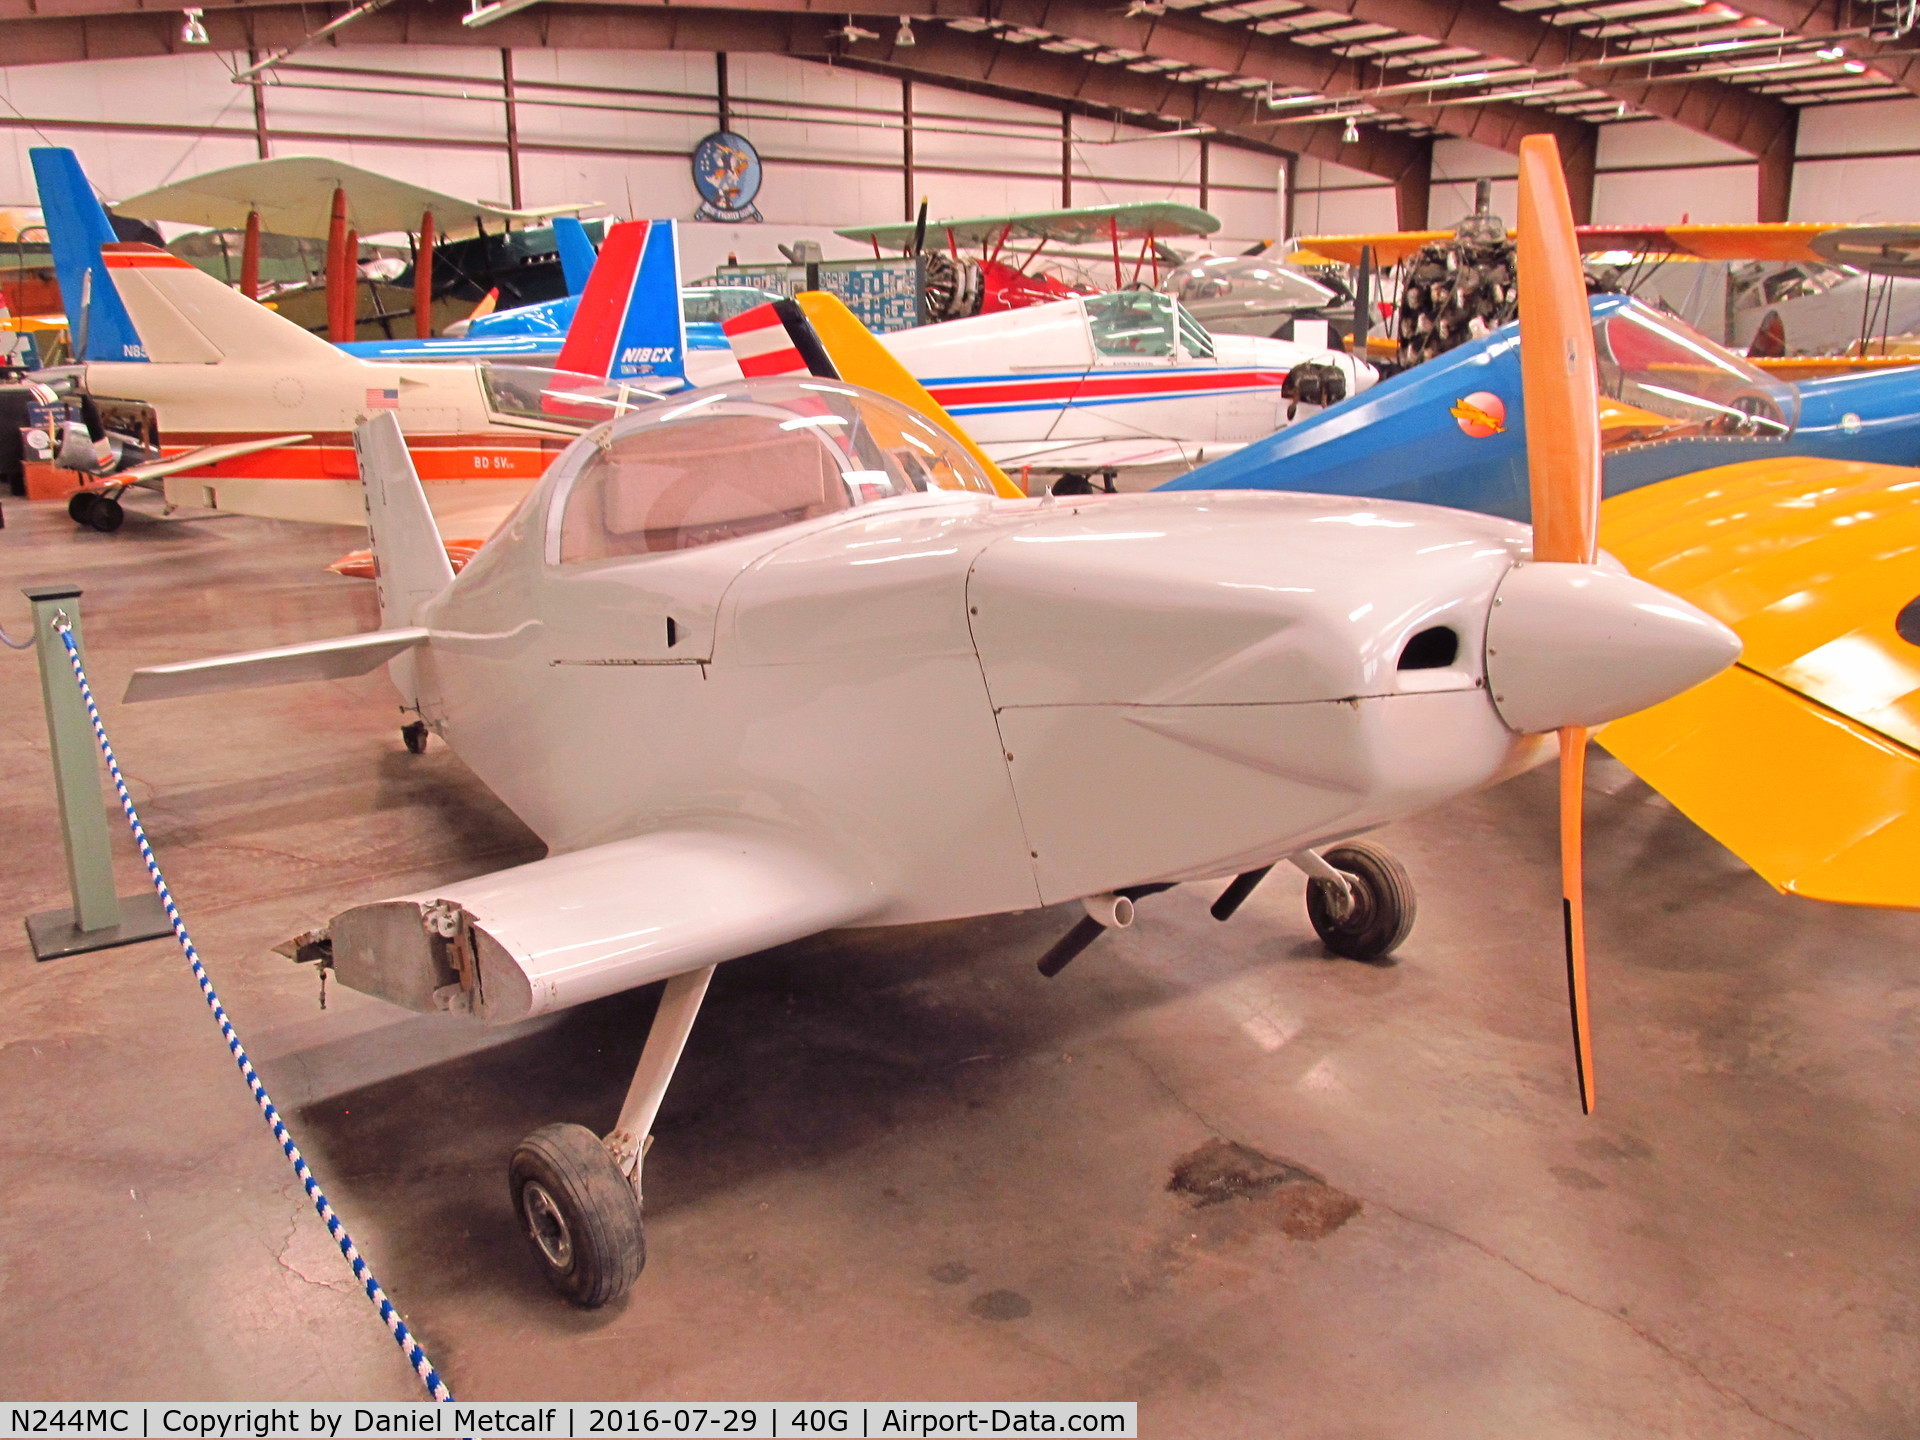 N244MC, 1986 Rand Robinson KR-2 C/N MC-1, Planes of Fame Air Museum (Valle-Williams, AZ Location)